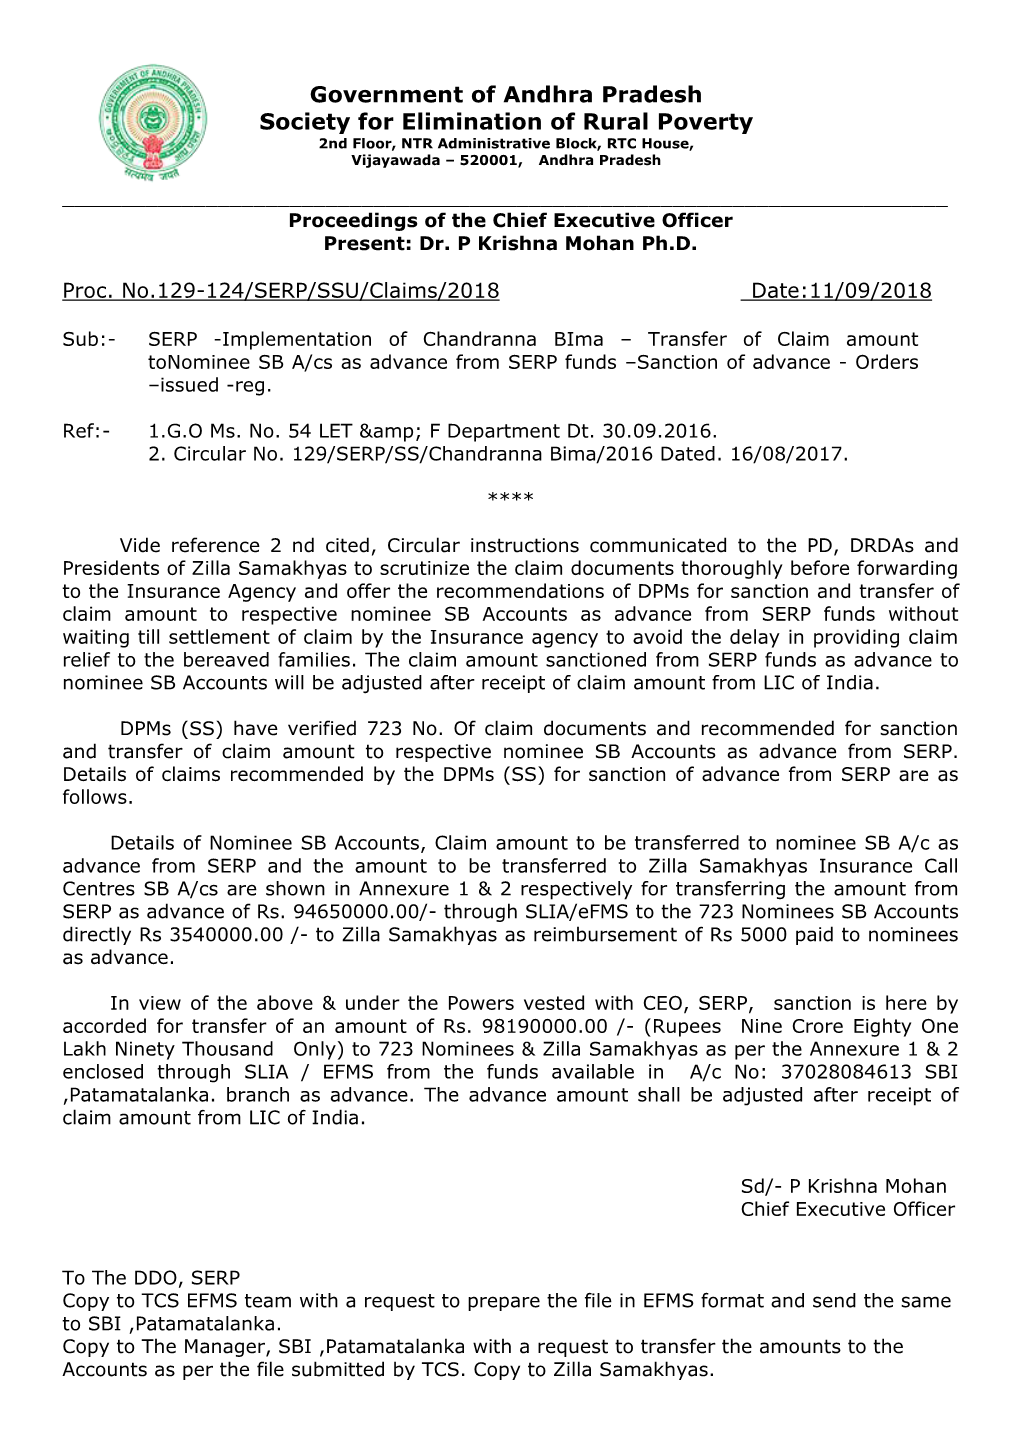 Government of Andhra Pradesh Society for Elimination of Rural Poverty 2Nd Floor, NTR Administrative Block, RTC House, Vijayawada – 520001, Andhra Pradesh